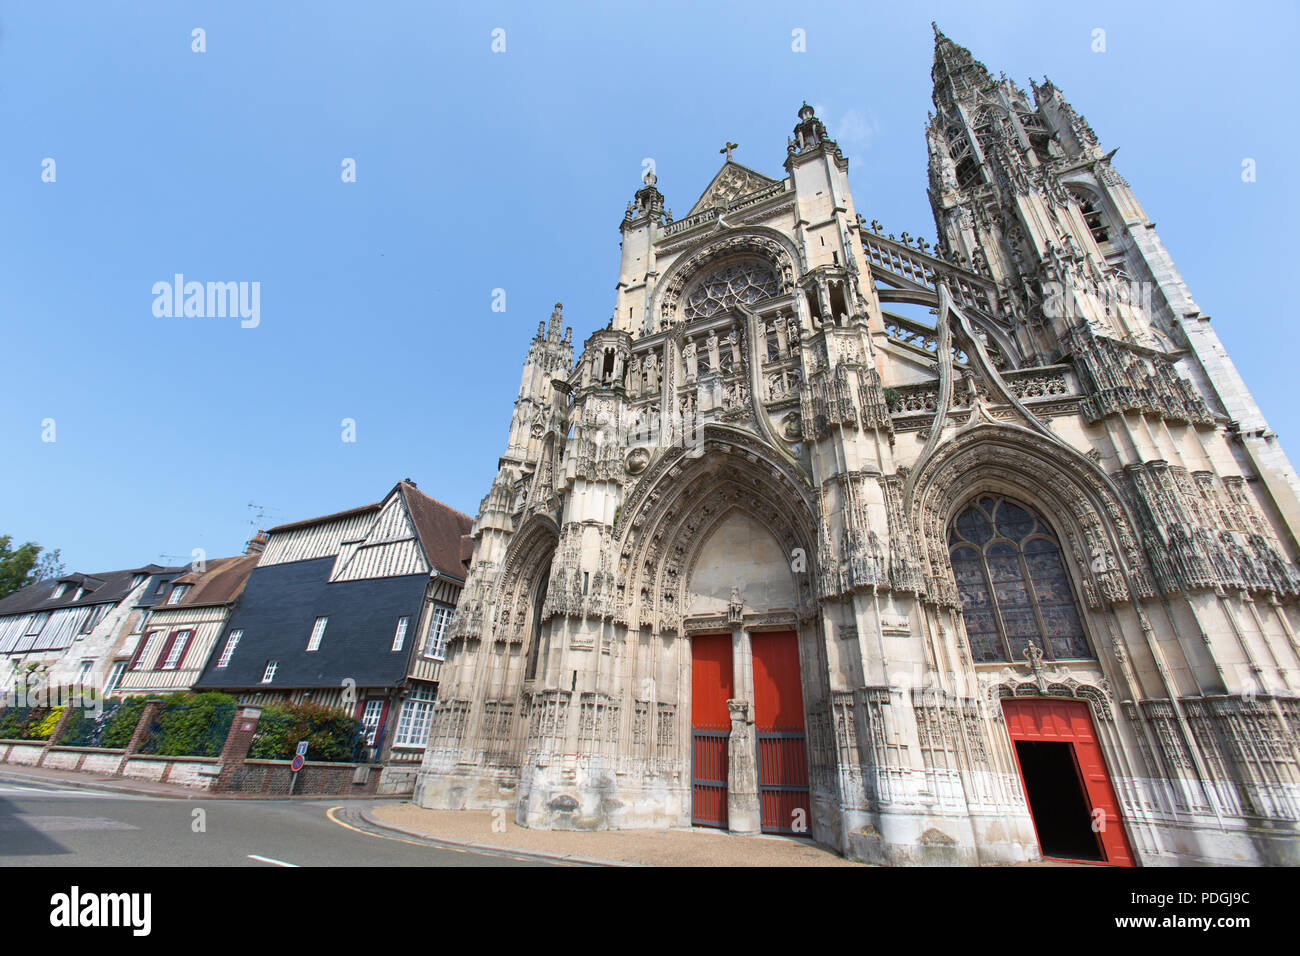 Town of Caudebec-en-Caux, France. Picturesque view of the Roman Catholic Eglise Notre-Dame. Stock Photo